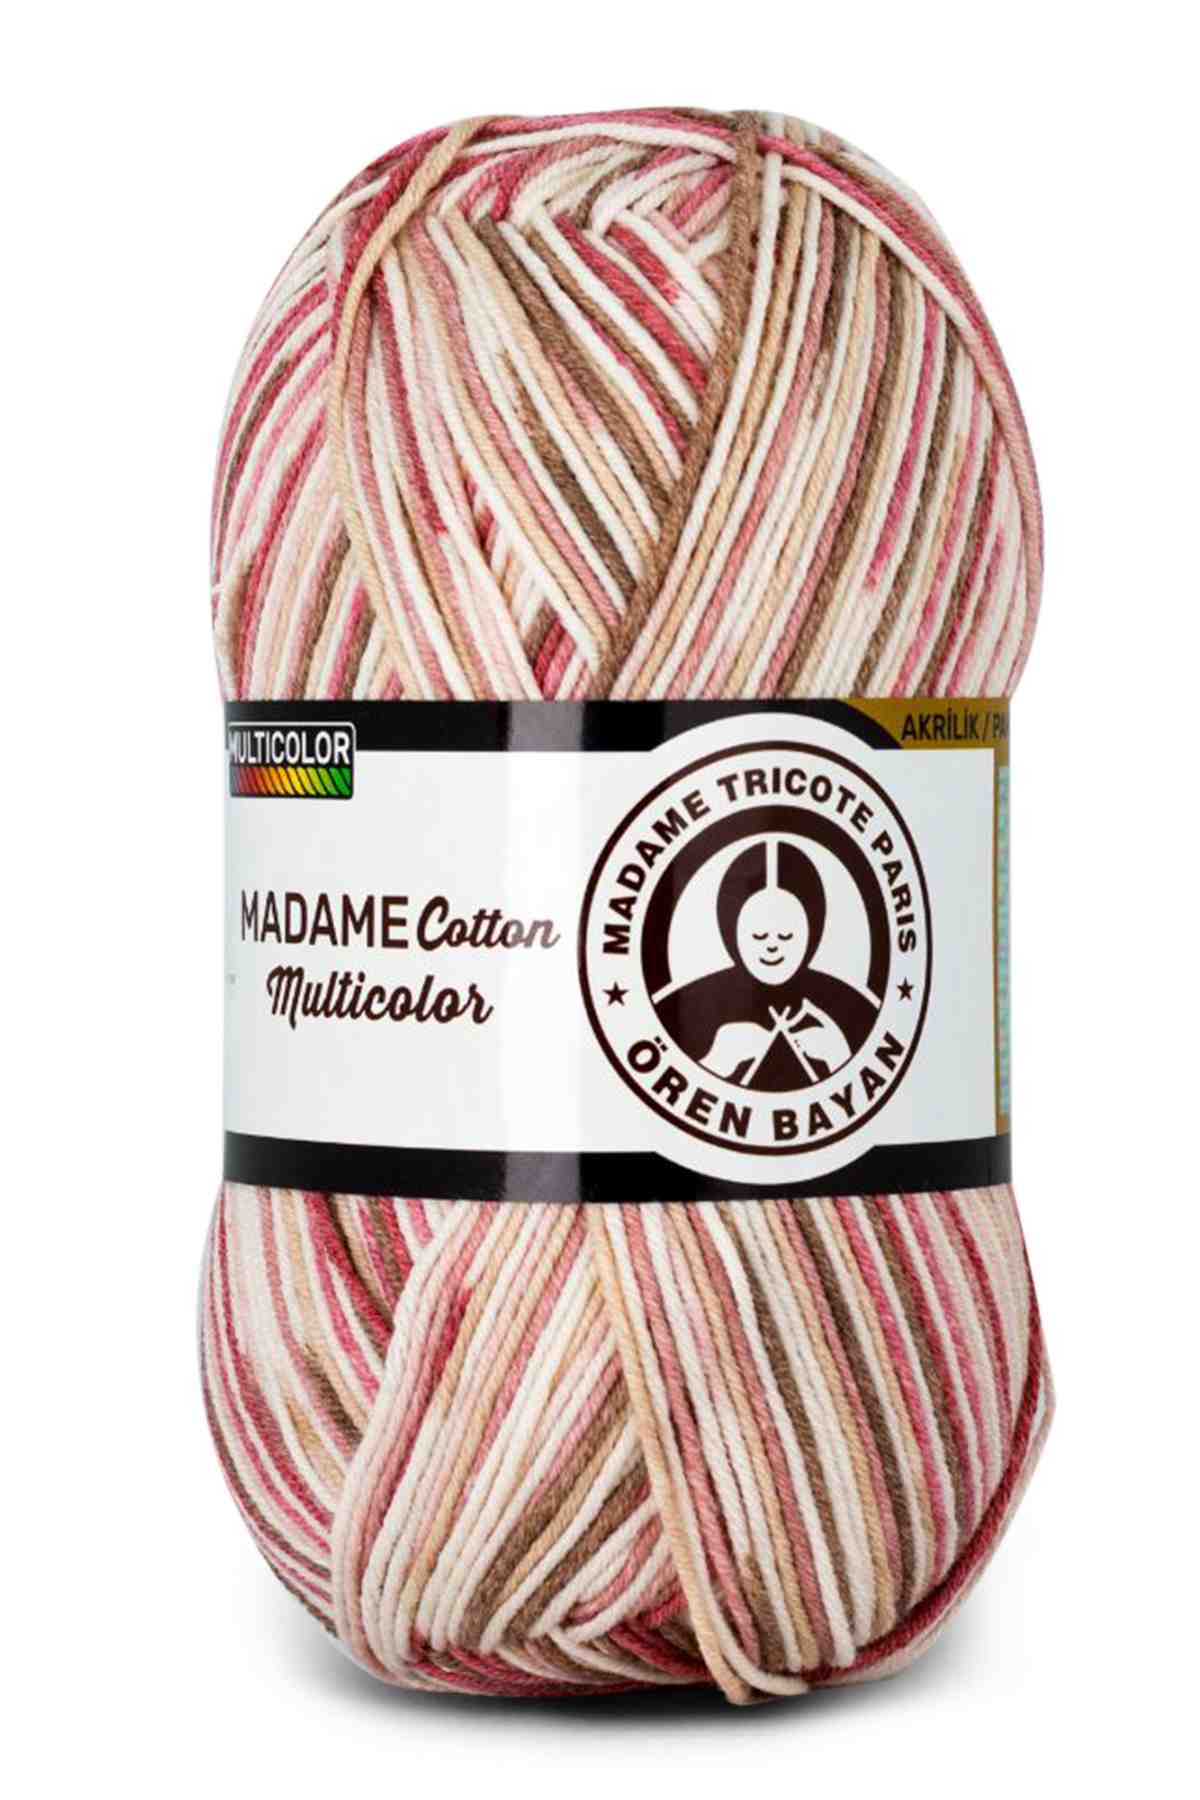 Madame Tricote Paris Madame Cotton Multicolor Cotton Yarn